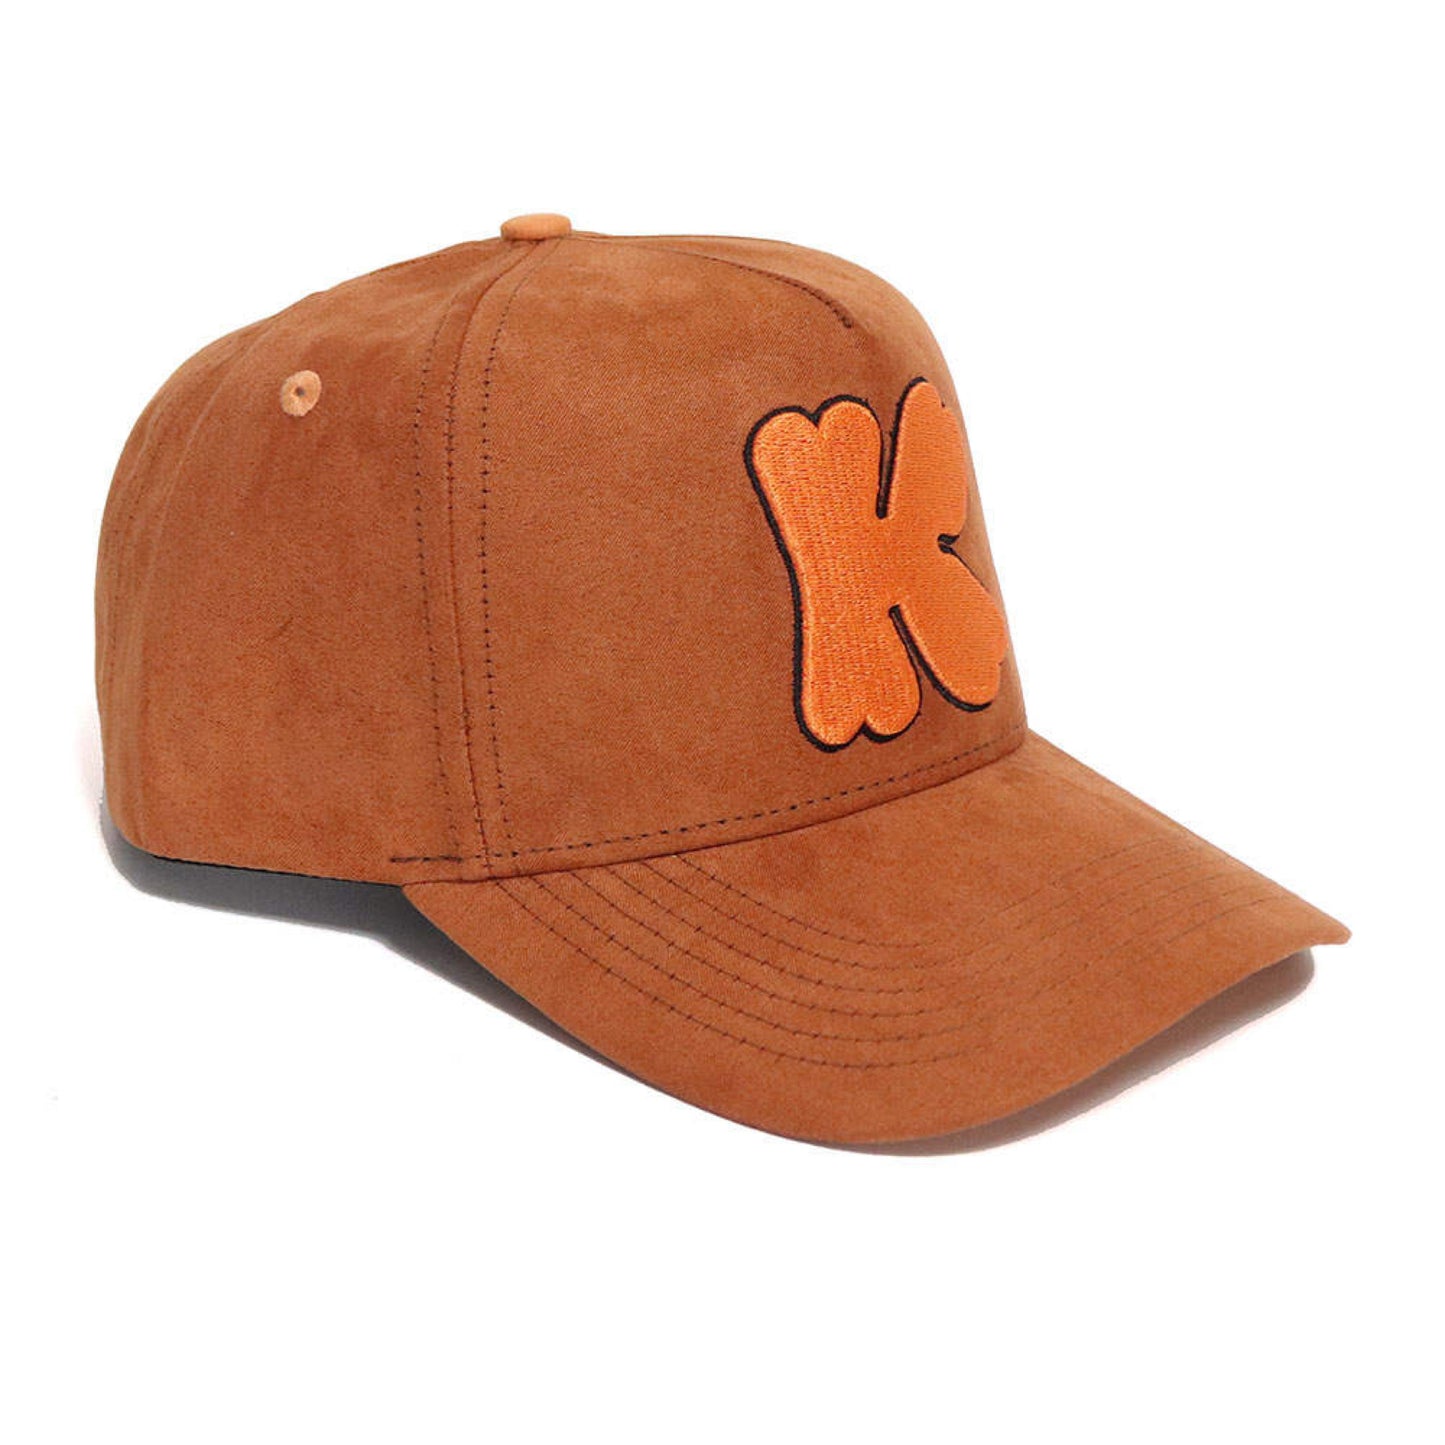 Klover "Cheez It" Adjustable Hat